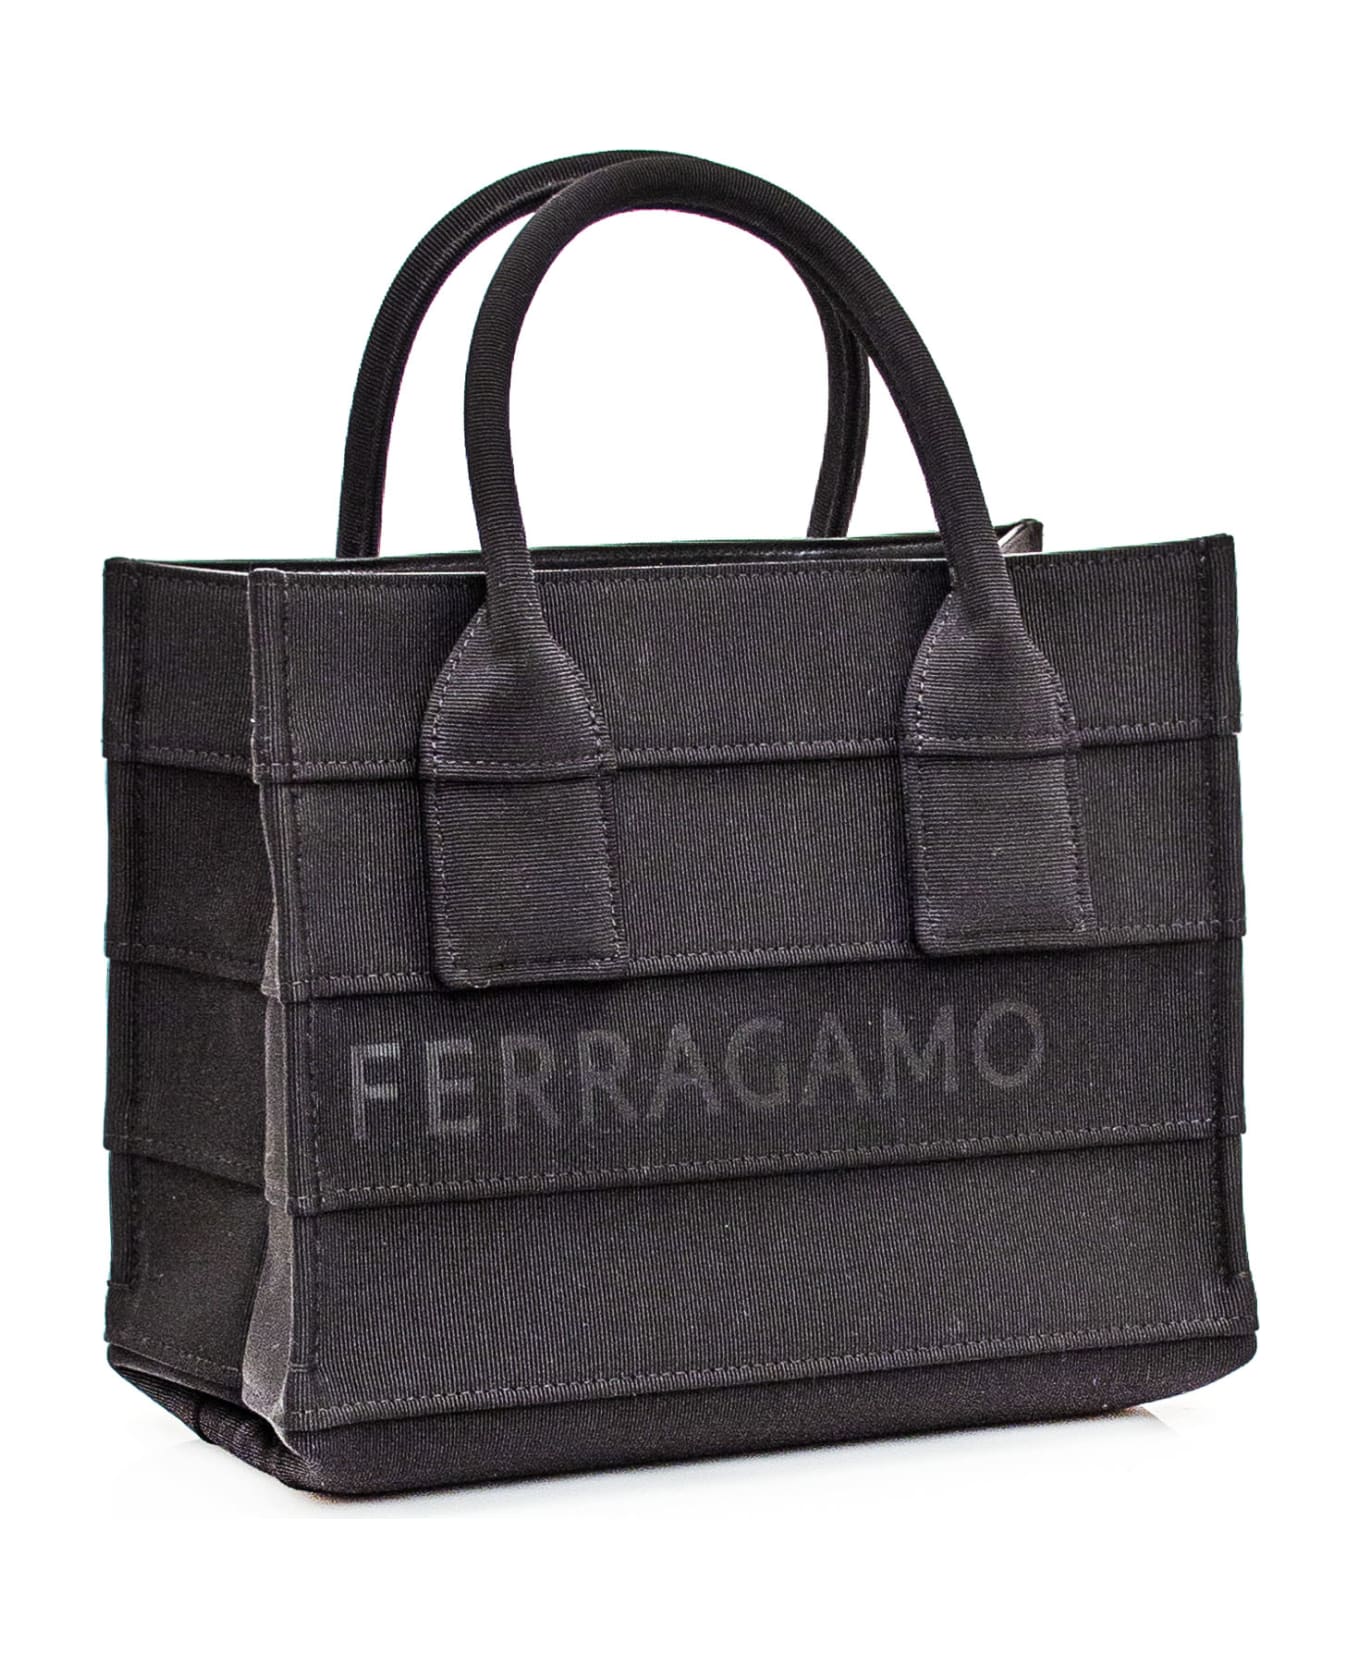 Ferragamo Black Fabric Beach S Handbag - NERO